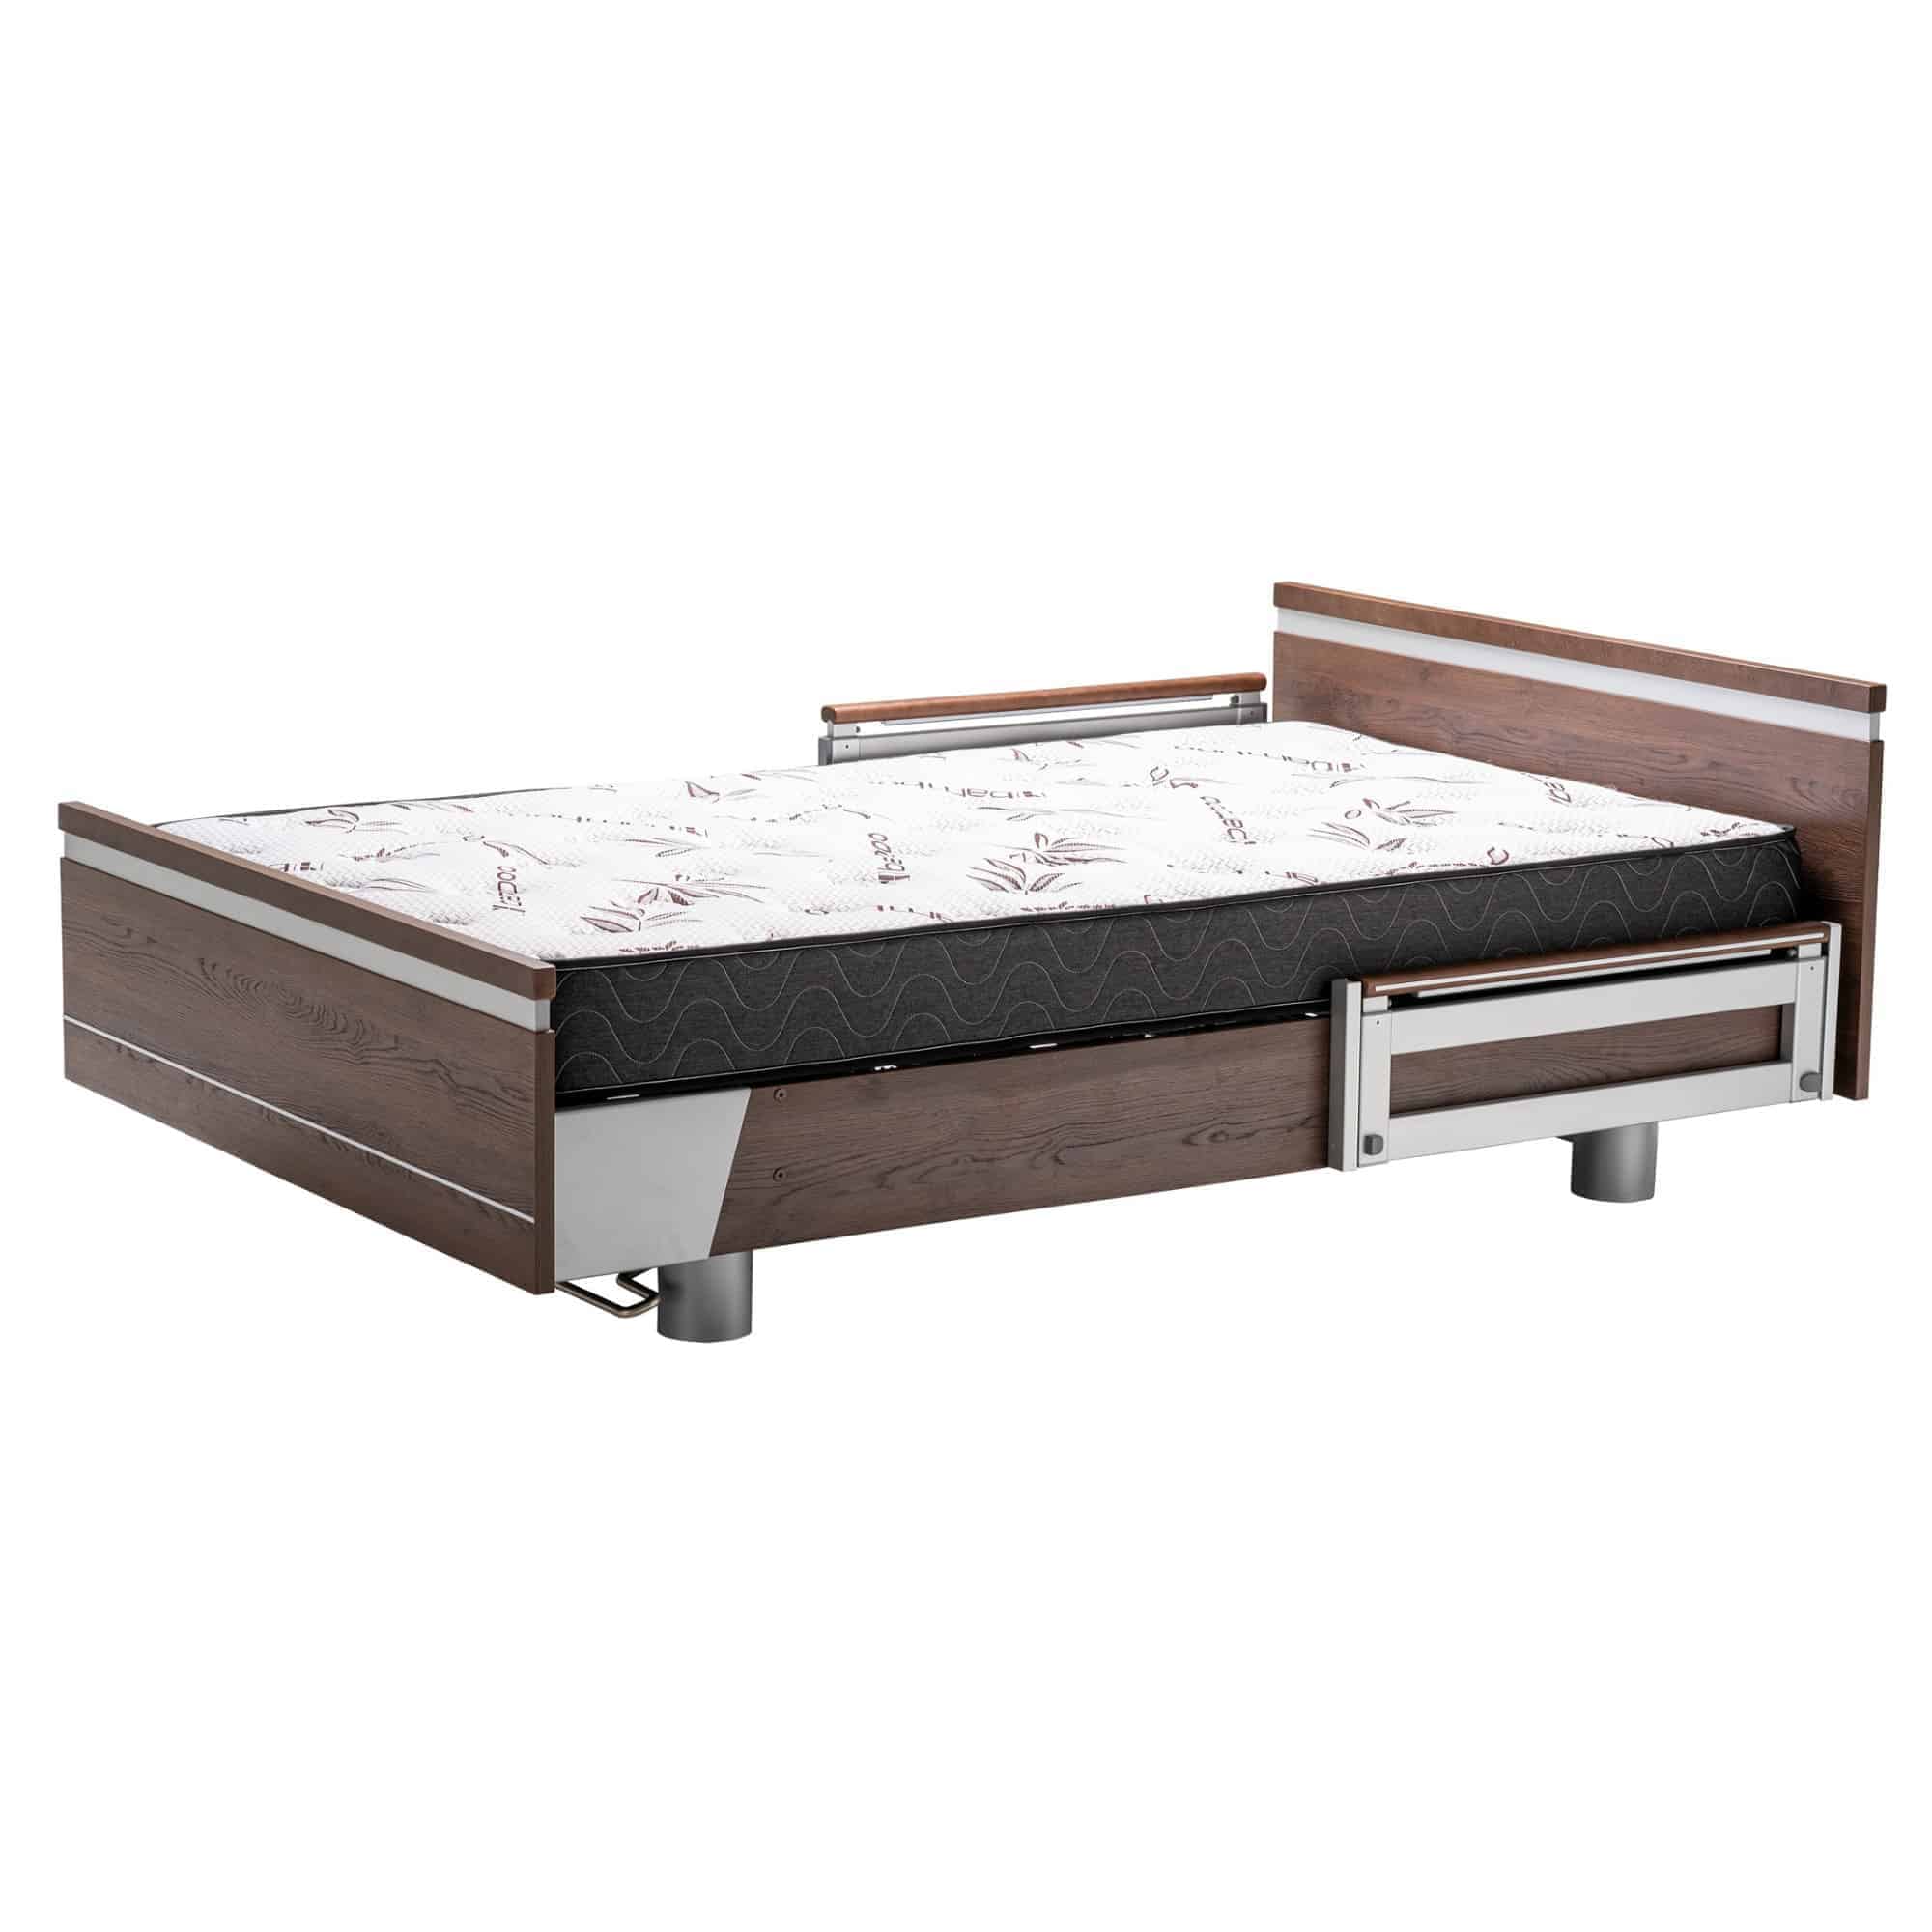 Invacare Carroll CS9 Adjustable Width Bed